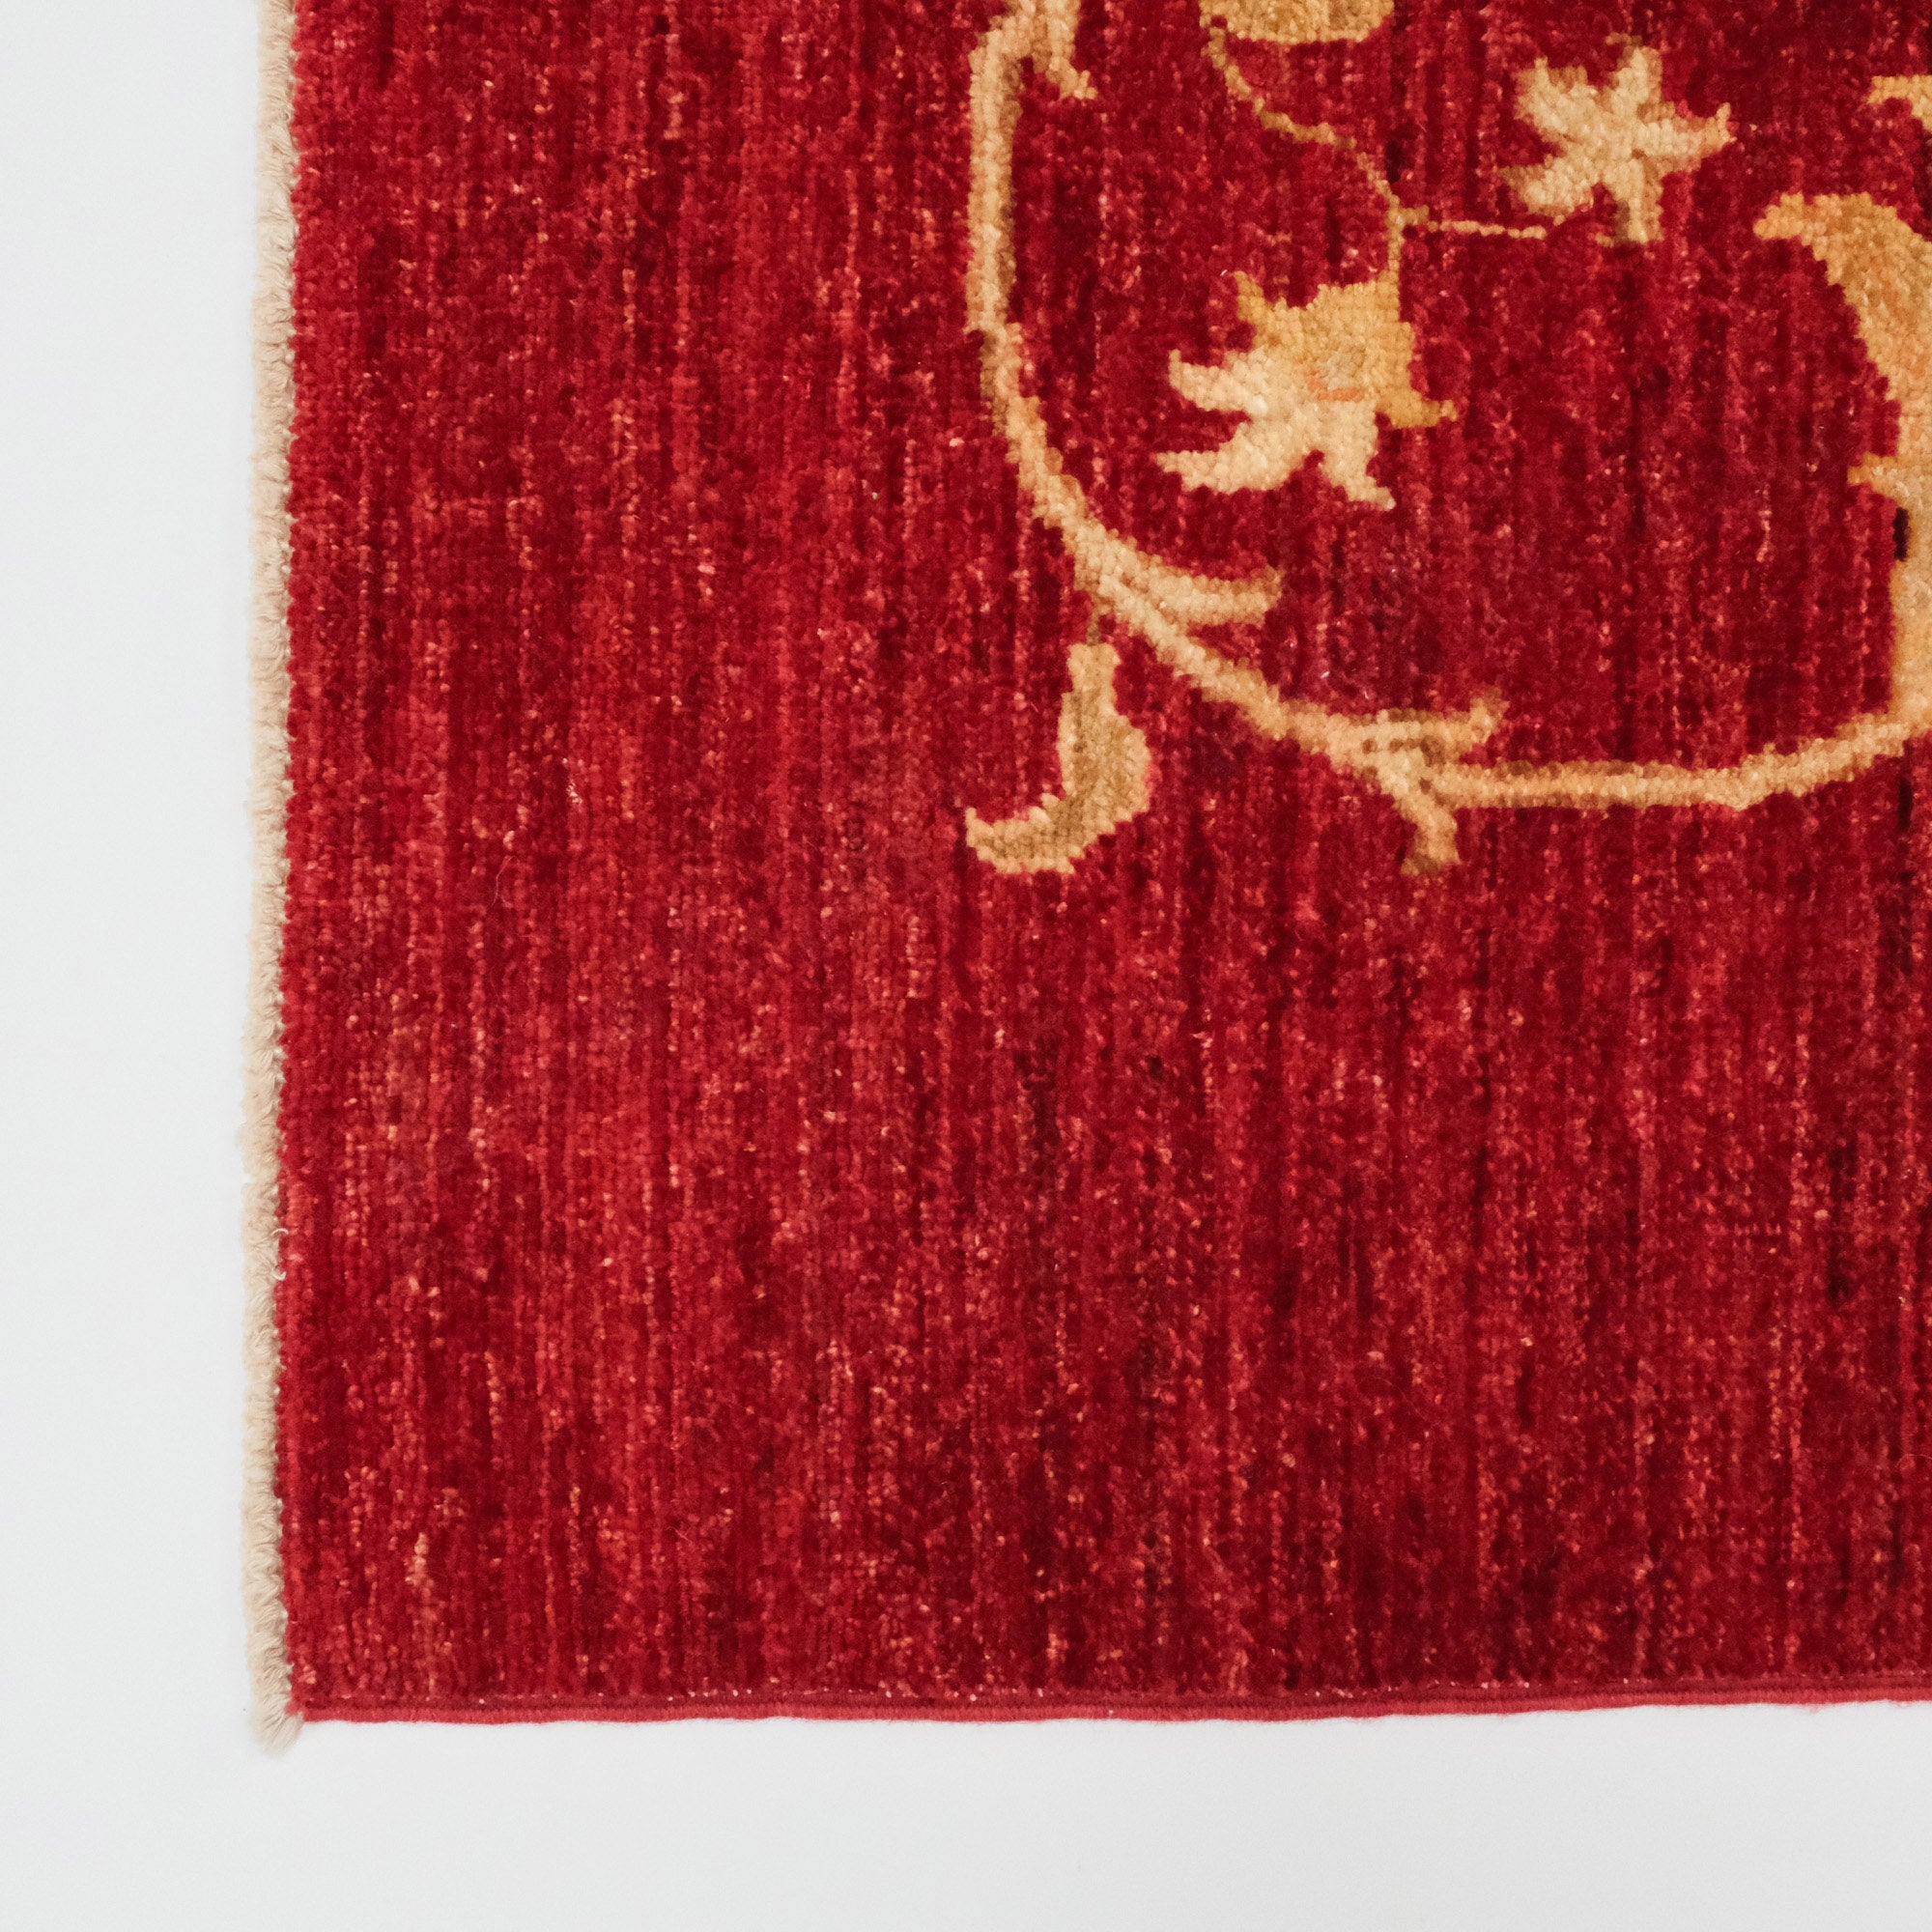 Hand Woven Anatolian Patterned Red Wool Cotton Carpet